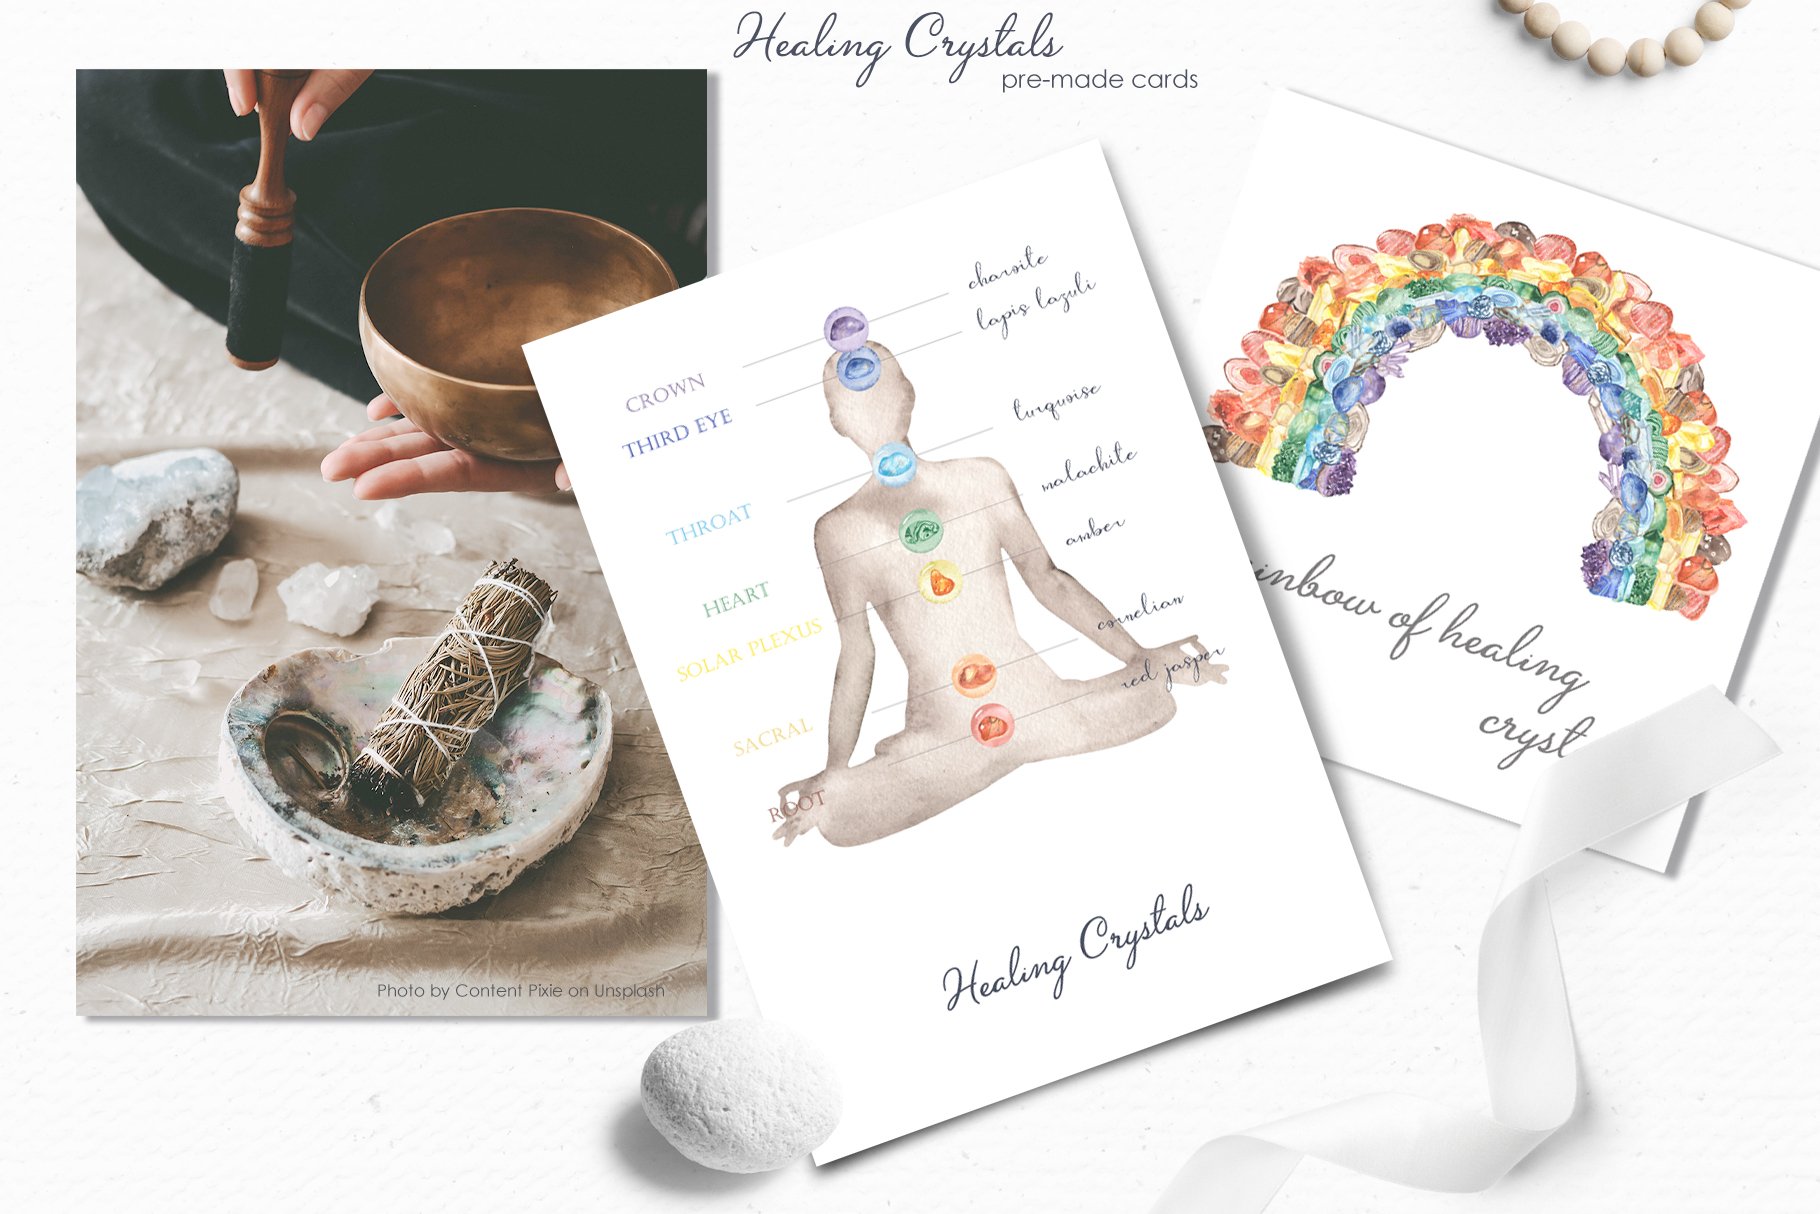 7 healing crystals watercolor premade cards 22